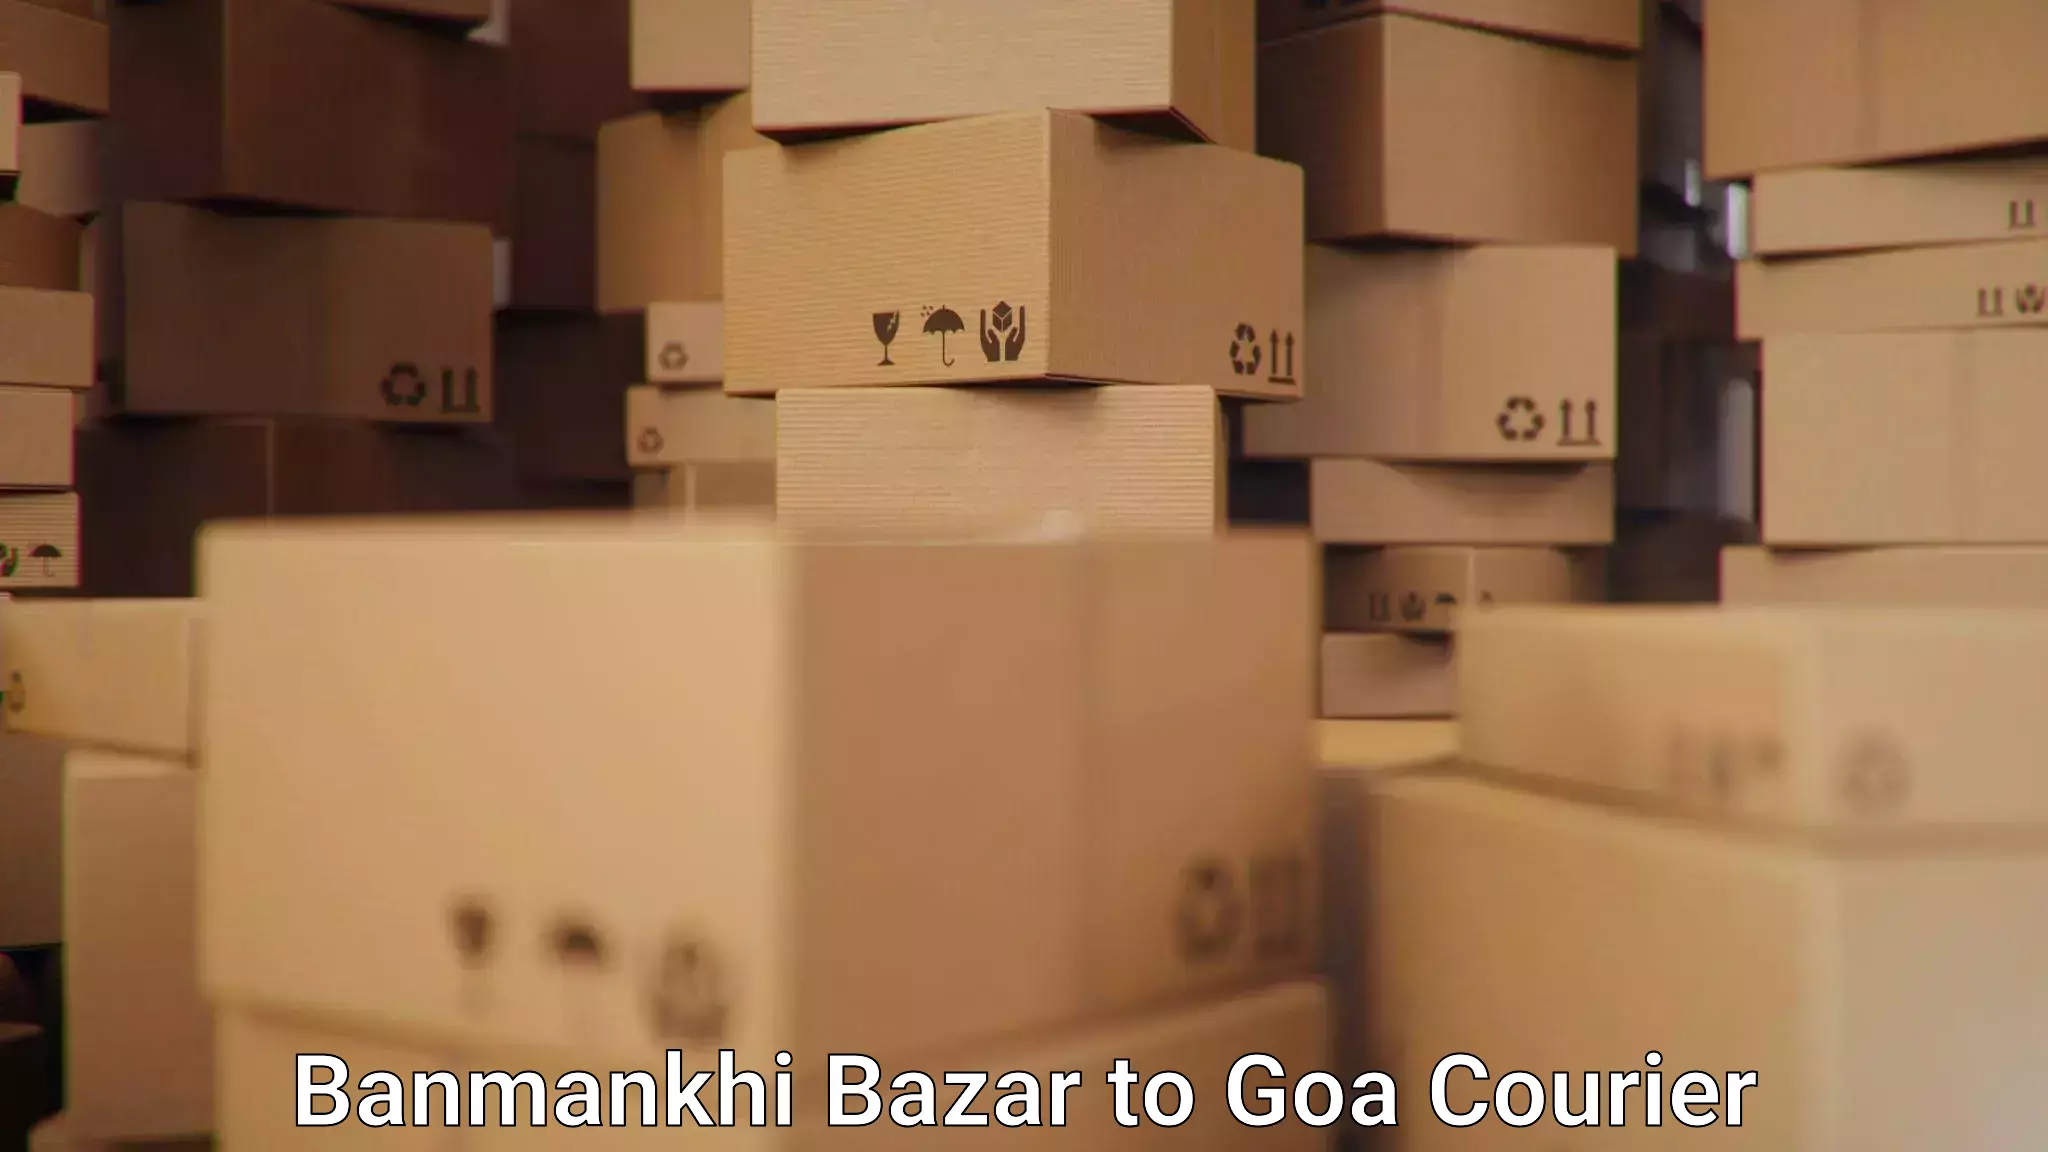 Easy access courier services in Banmankhi Bazar to Vasco da Gama